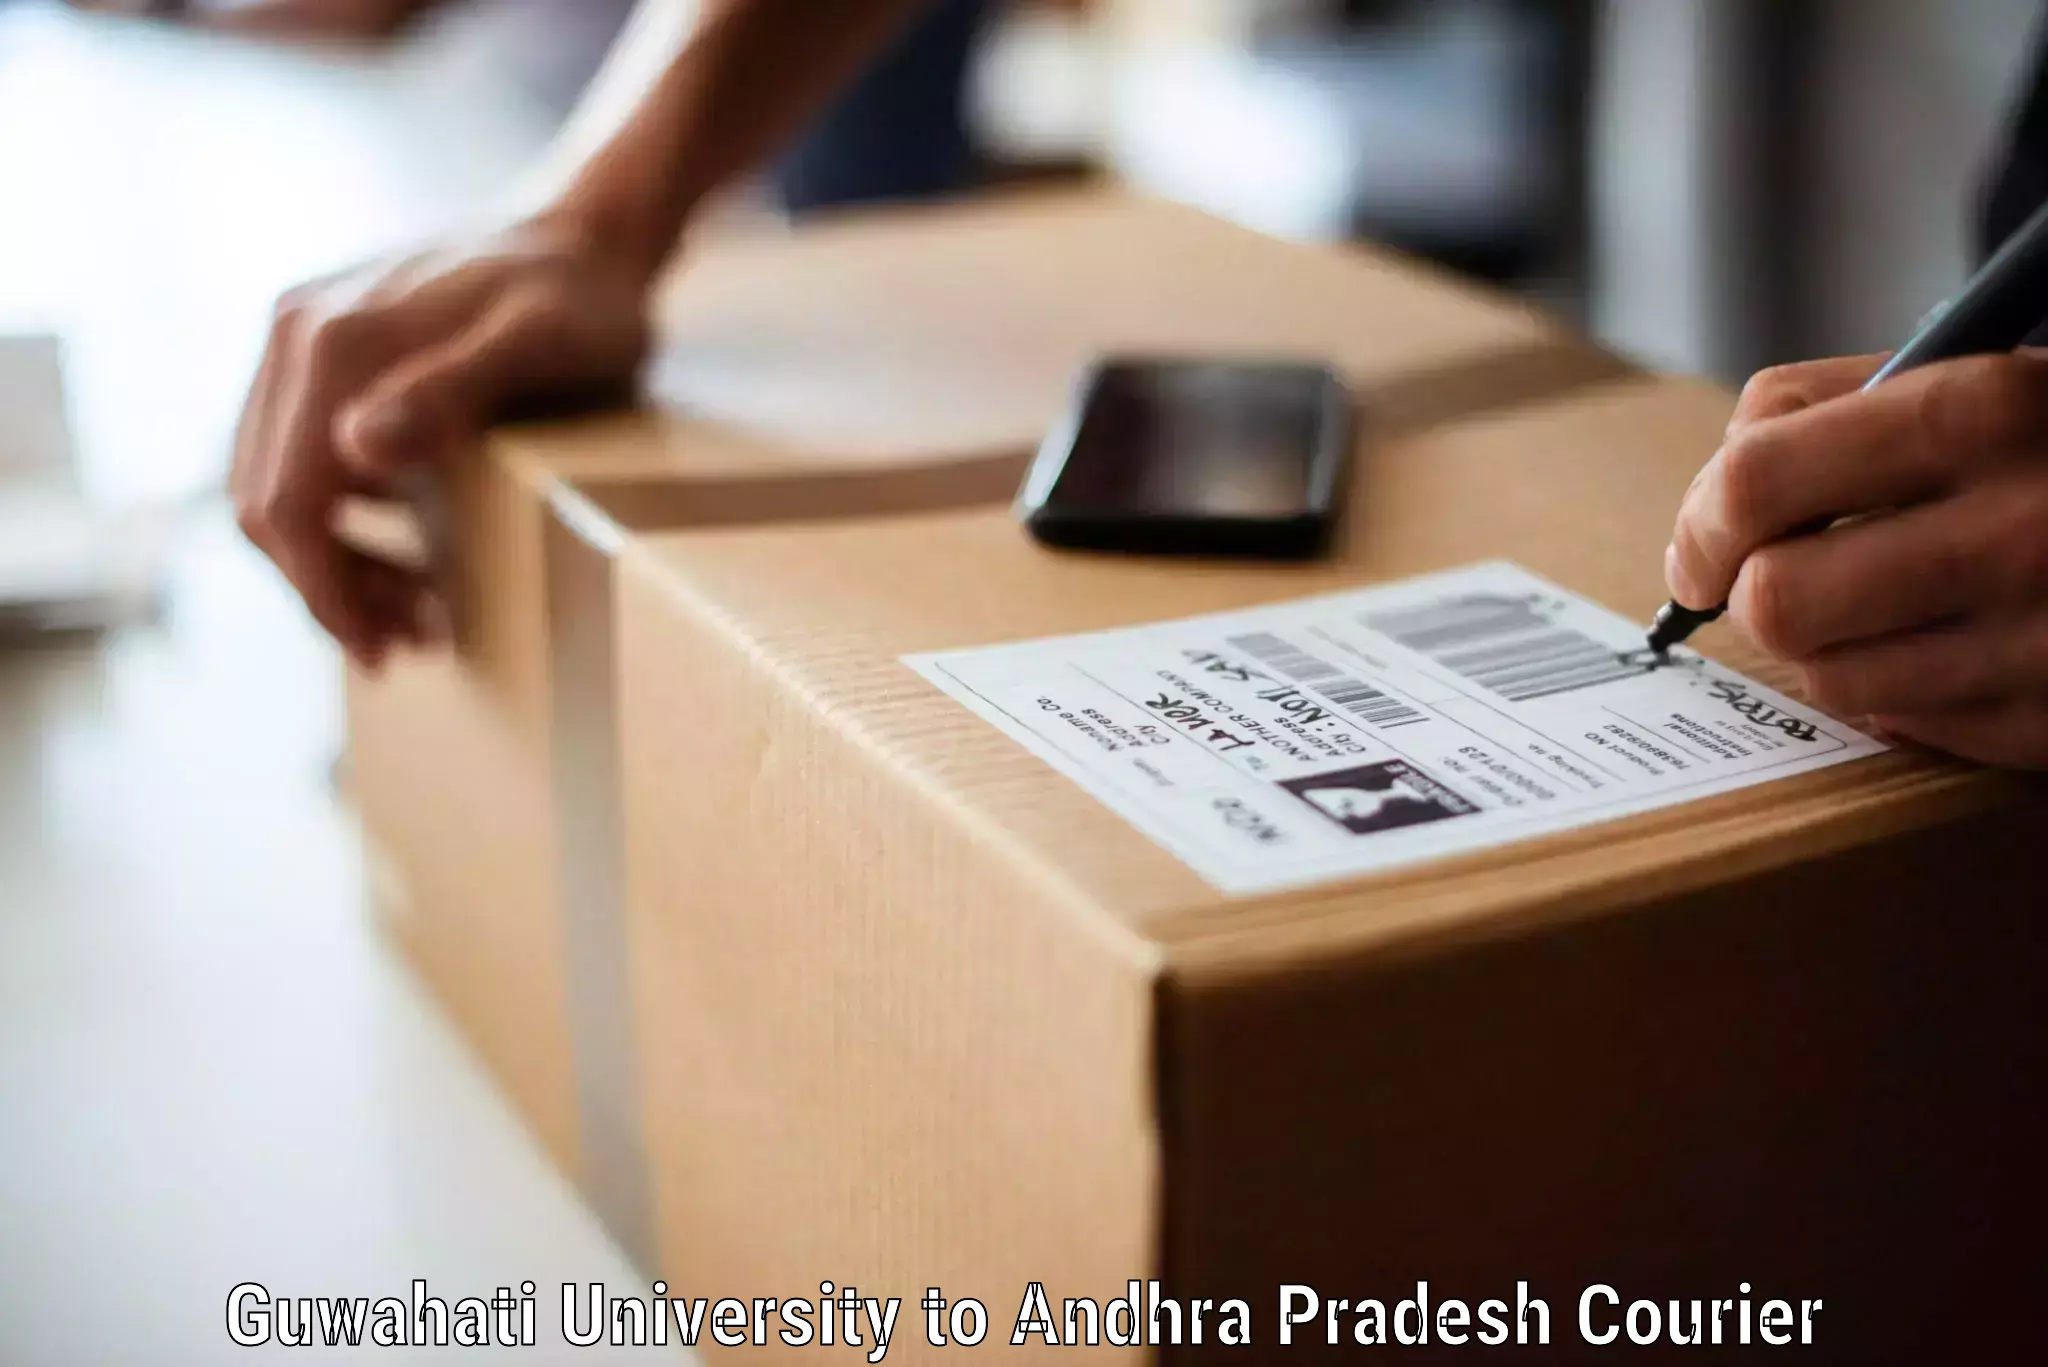 Packing and moving services Guwahati University to Tirupati